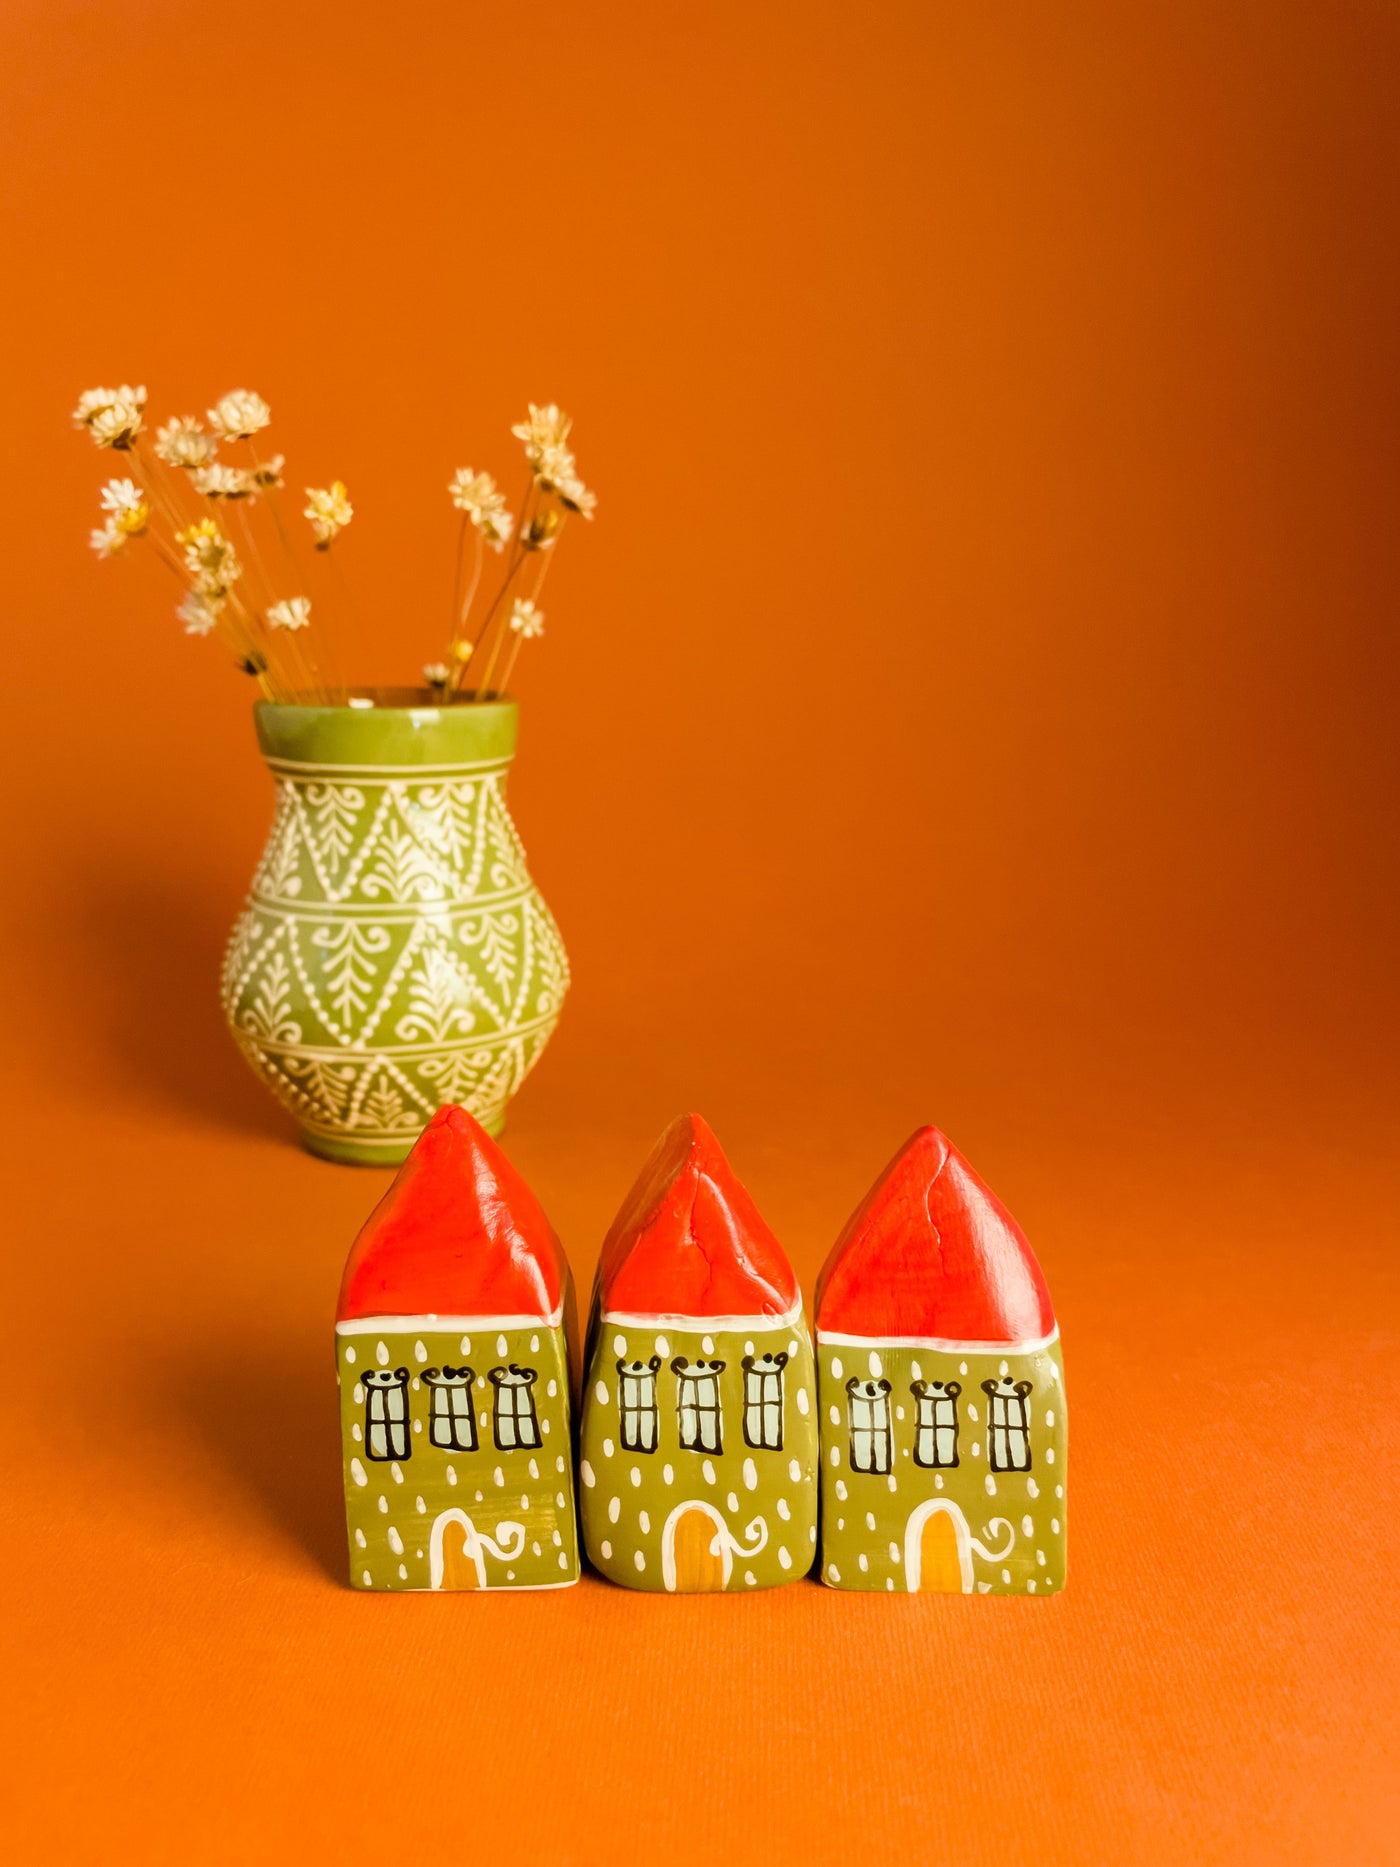 little-houses-raluca-tinca-decoratiune-casuta-din-ceramica-lucrata-manual-verde-cu-puncte-albe-cu-acoperis-rosu-1